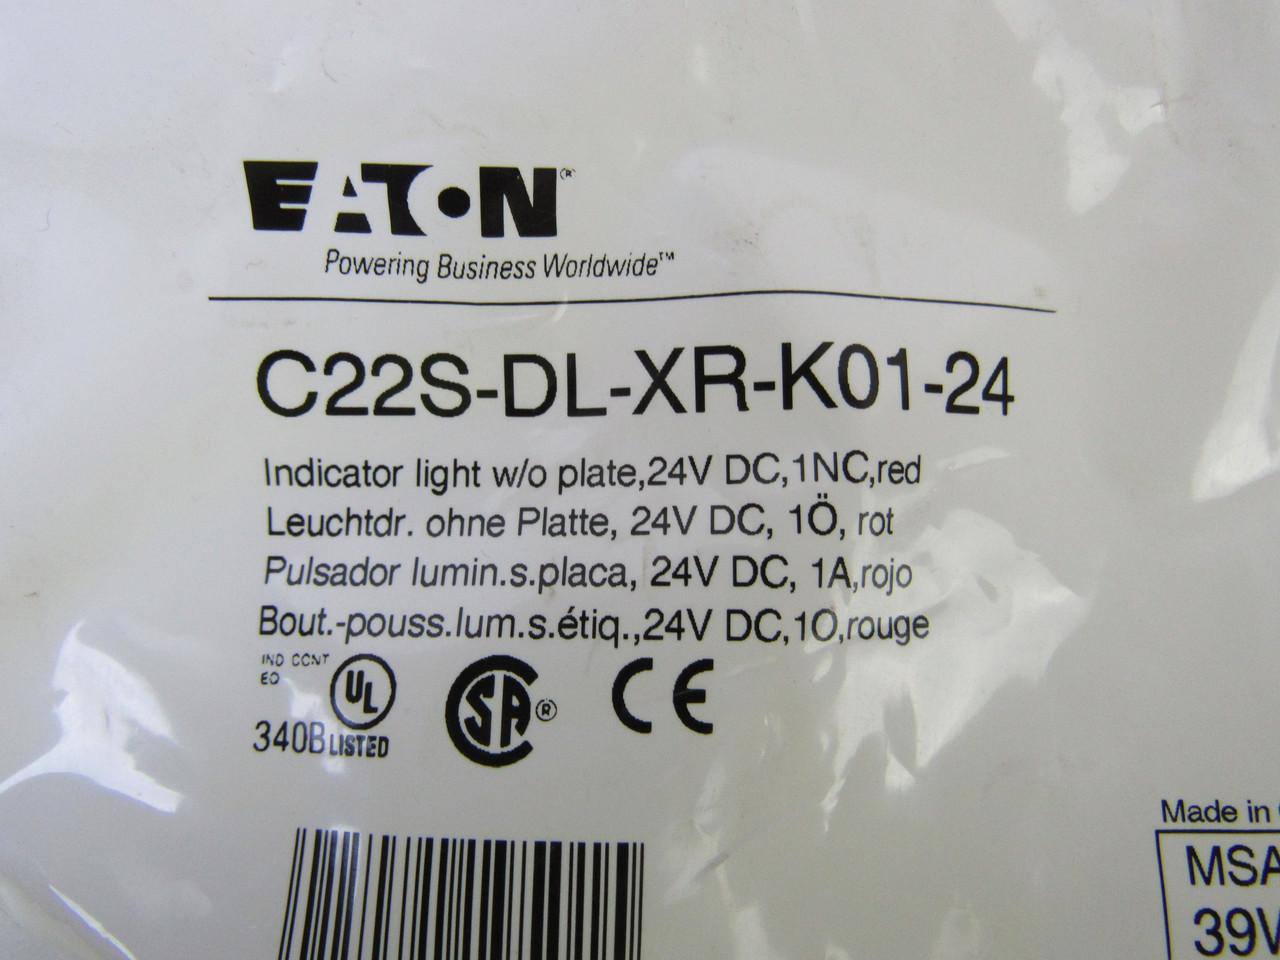 Eaton C22S-DL-XR-K01-24 Eaton - C22S-DL-XR-K01-24